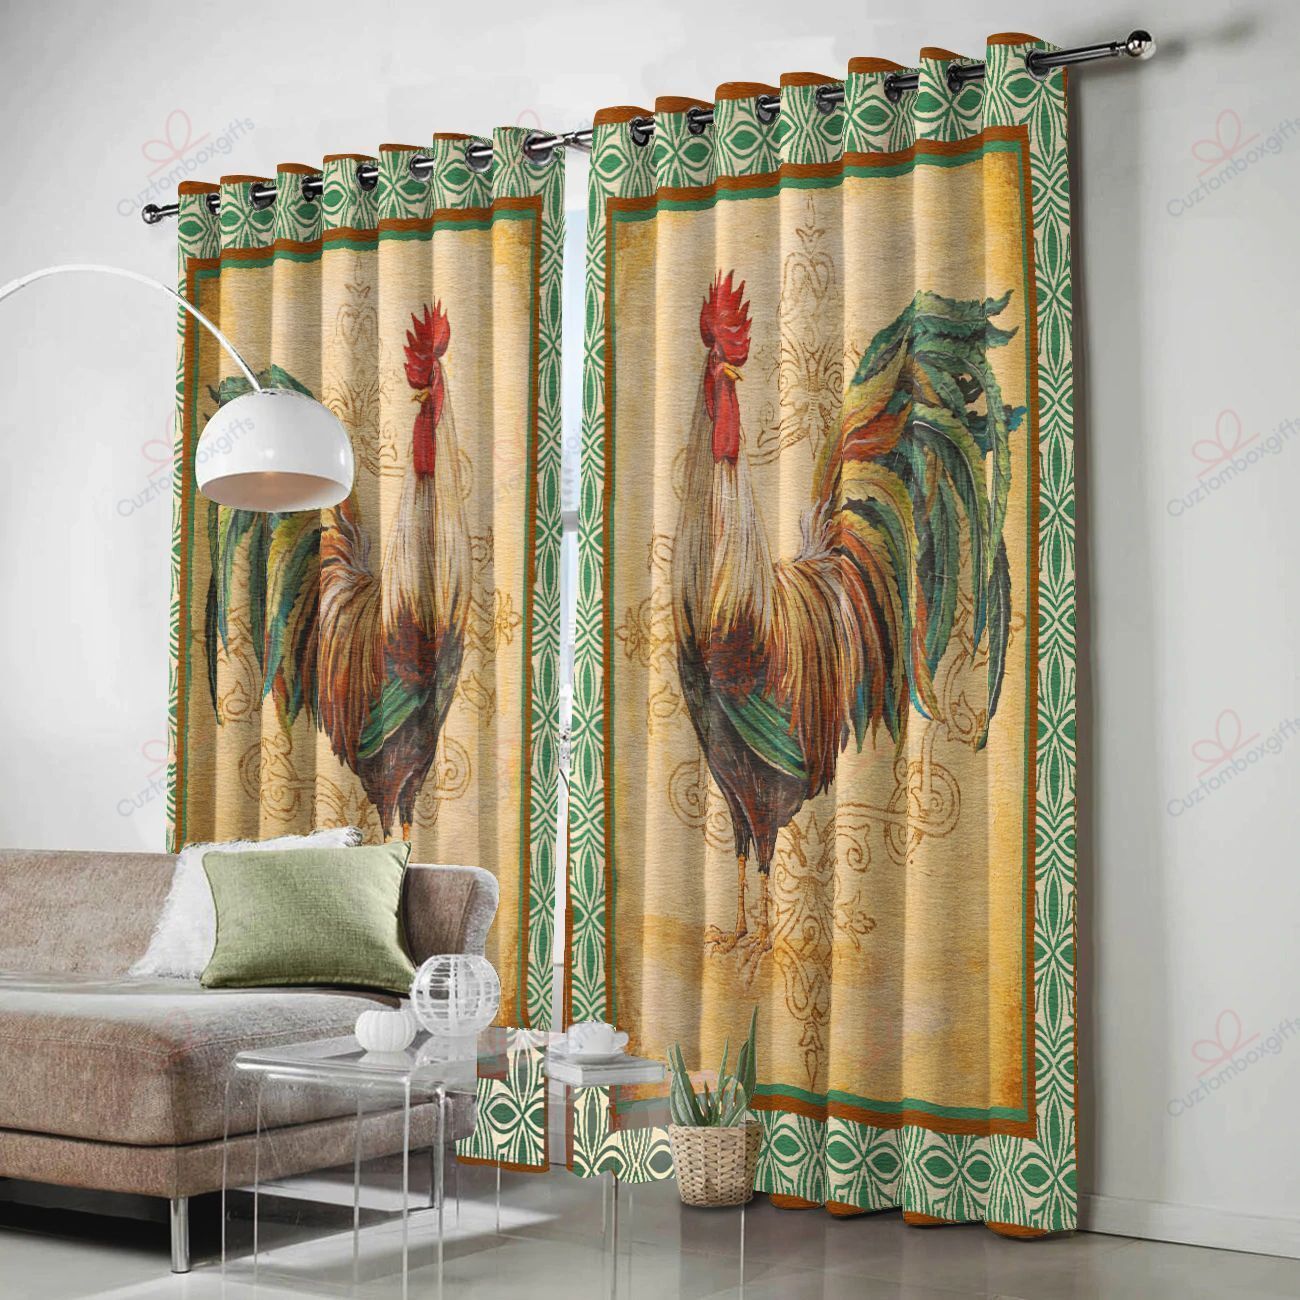 cock vintage printed window curtain home decor 3804